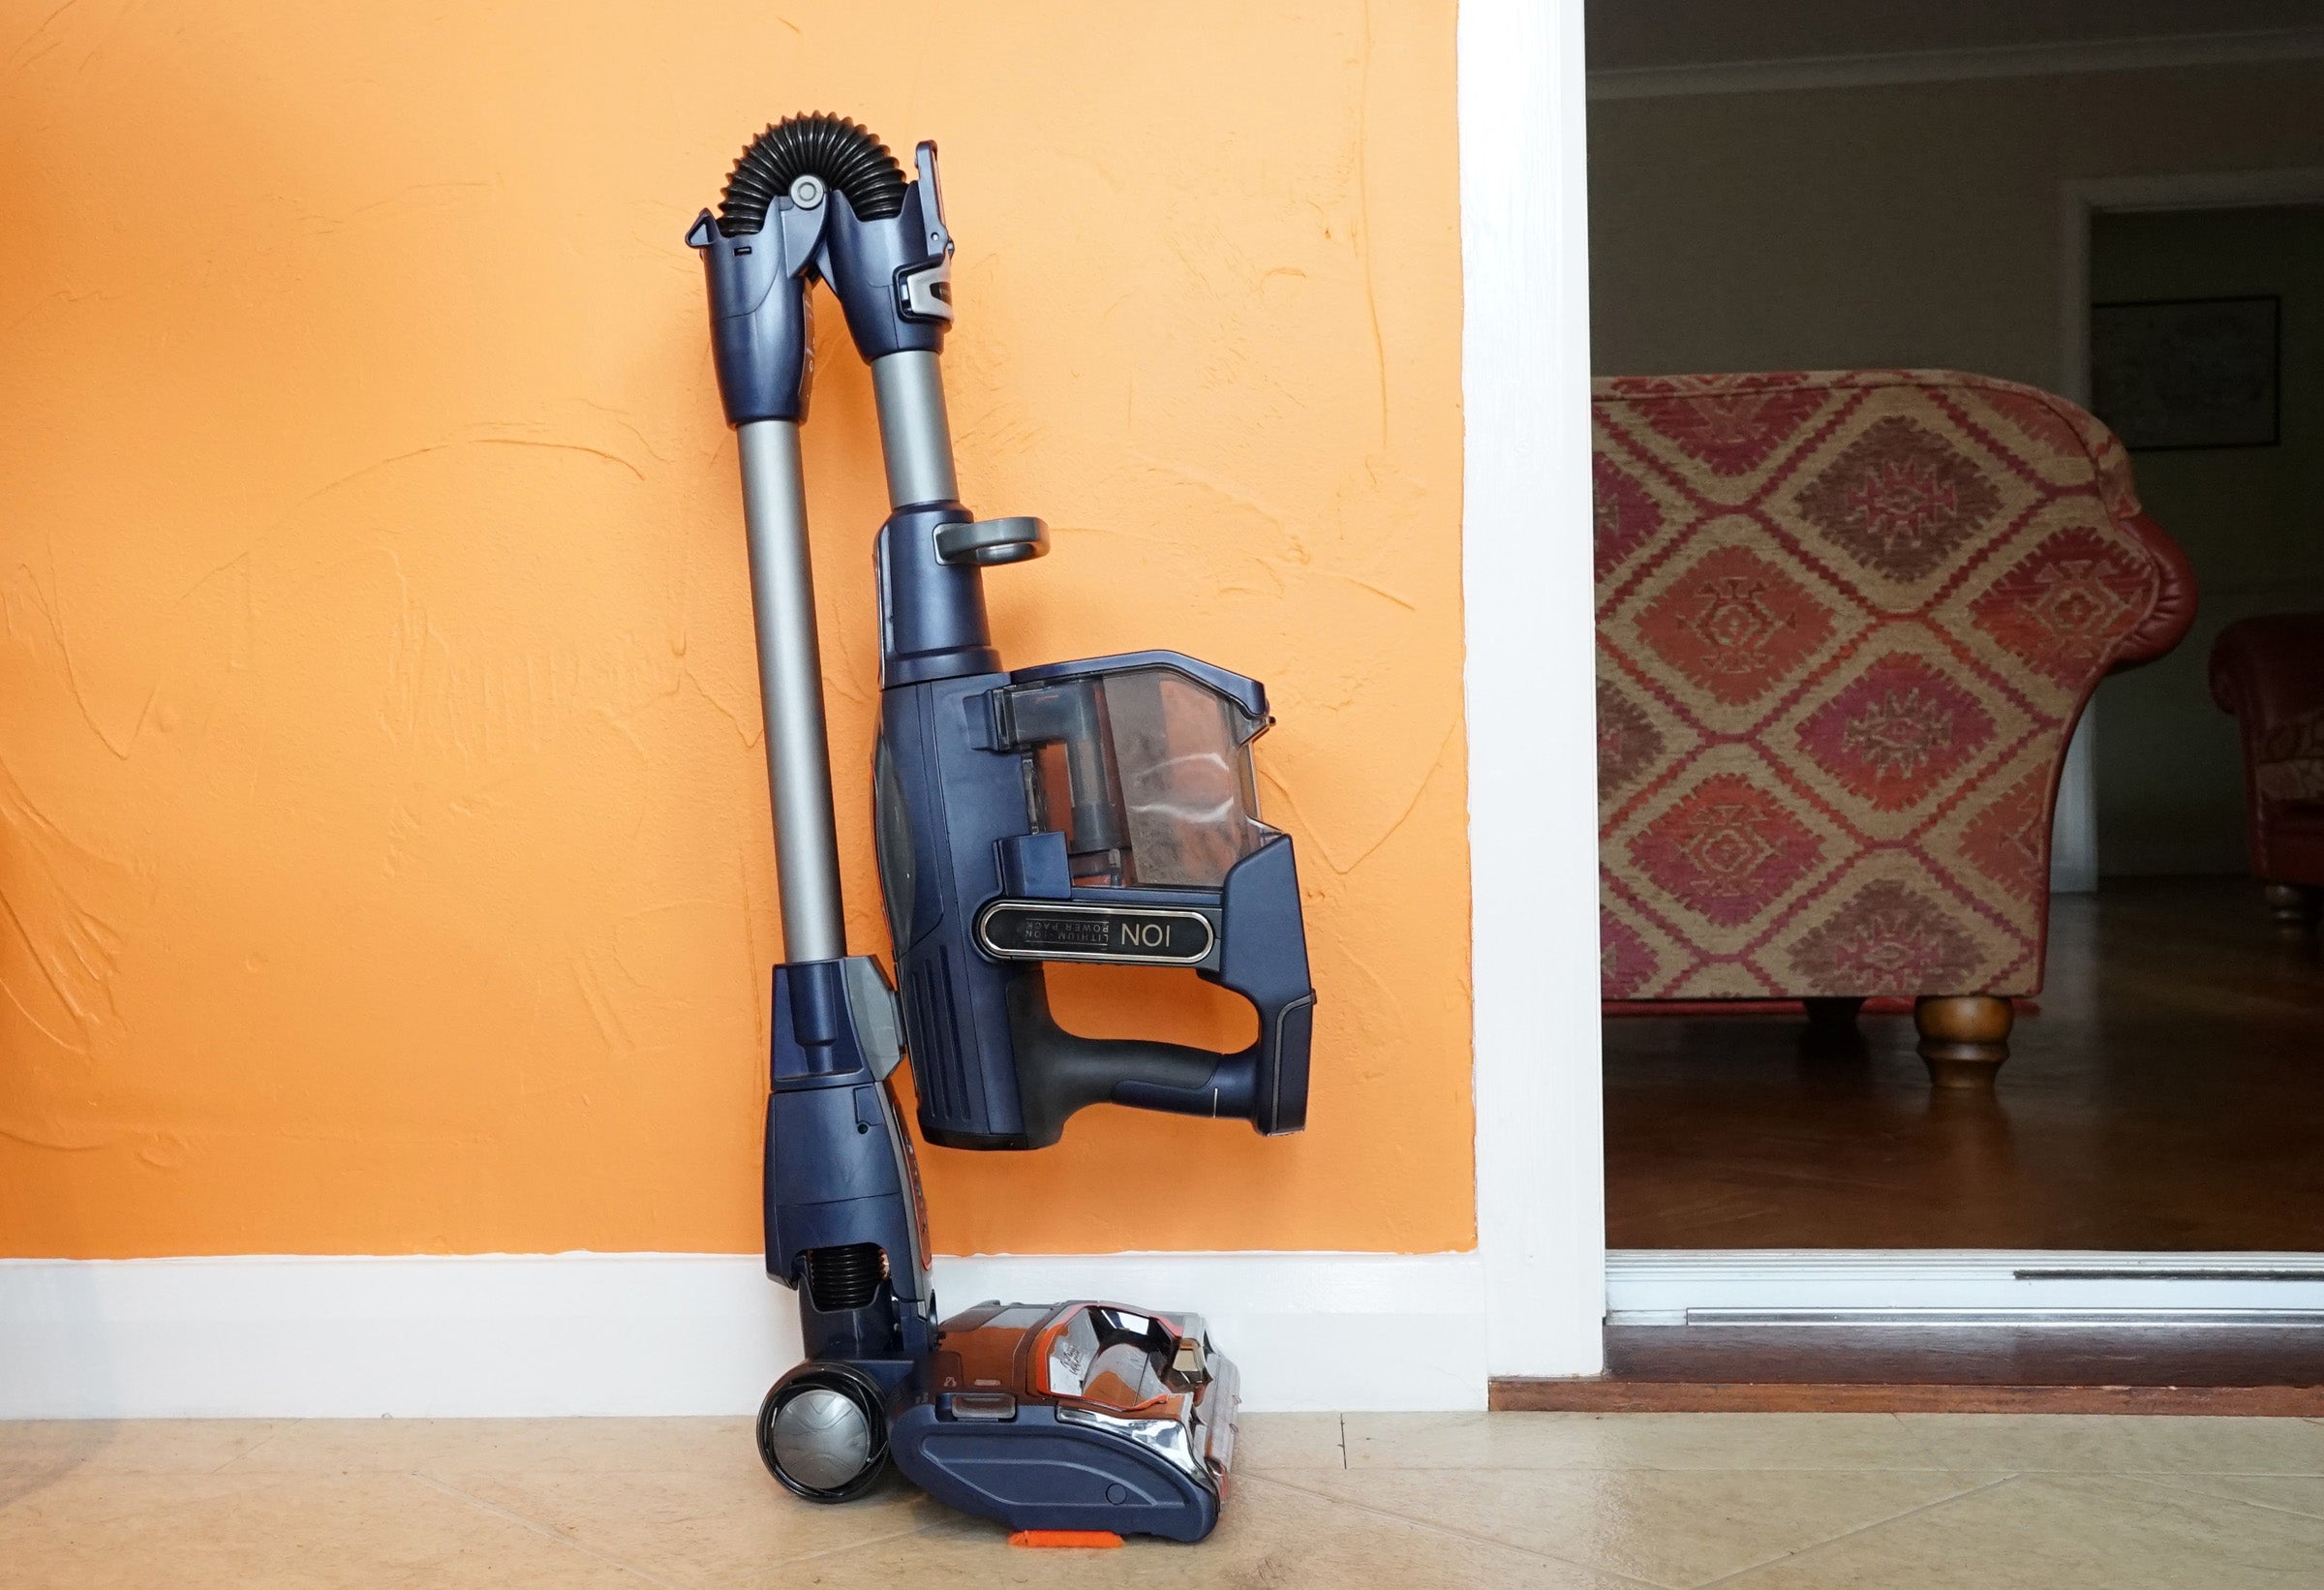 Shark DuoClean Cordless Vacuum cleaner against orange wall.